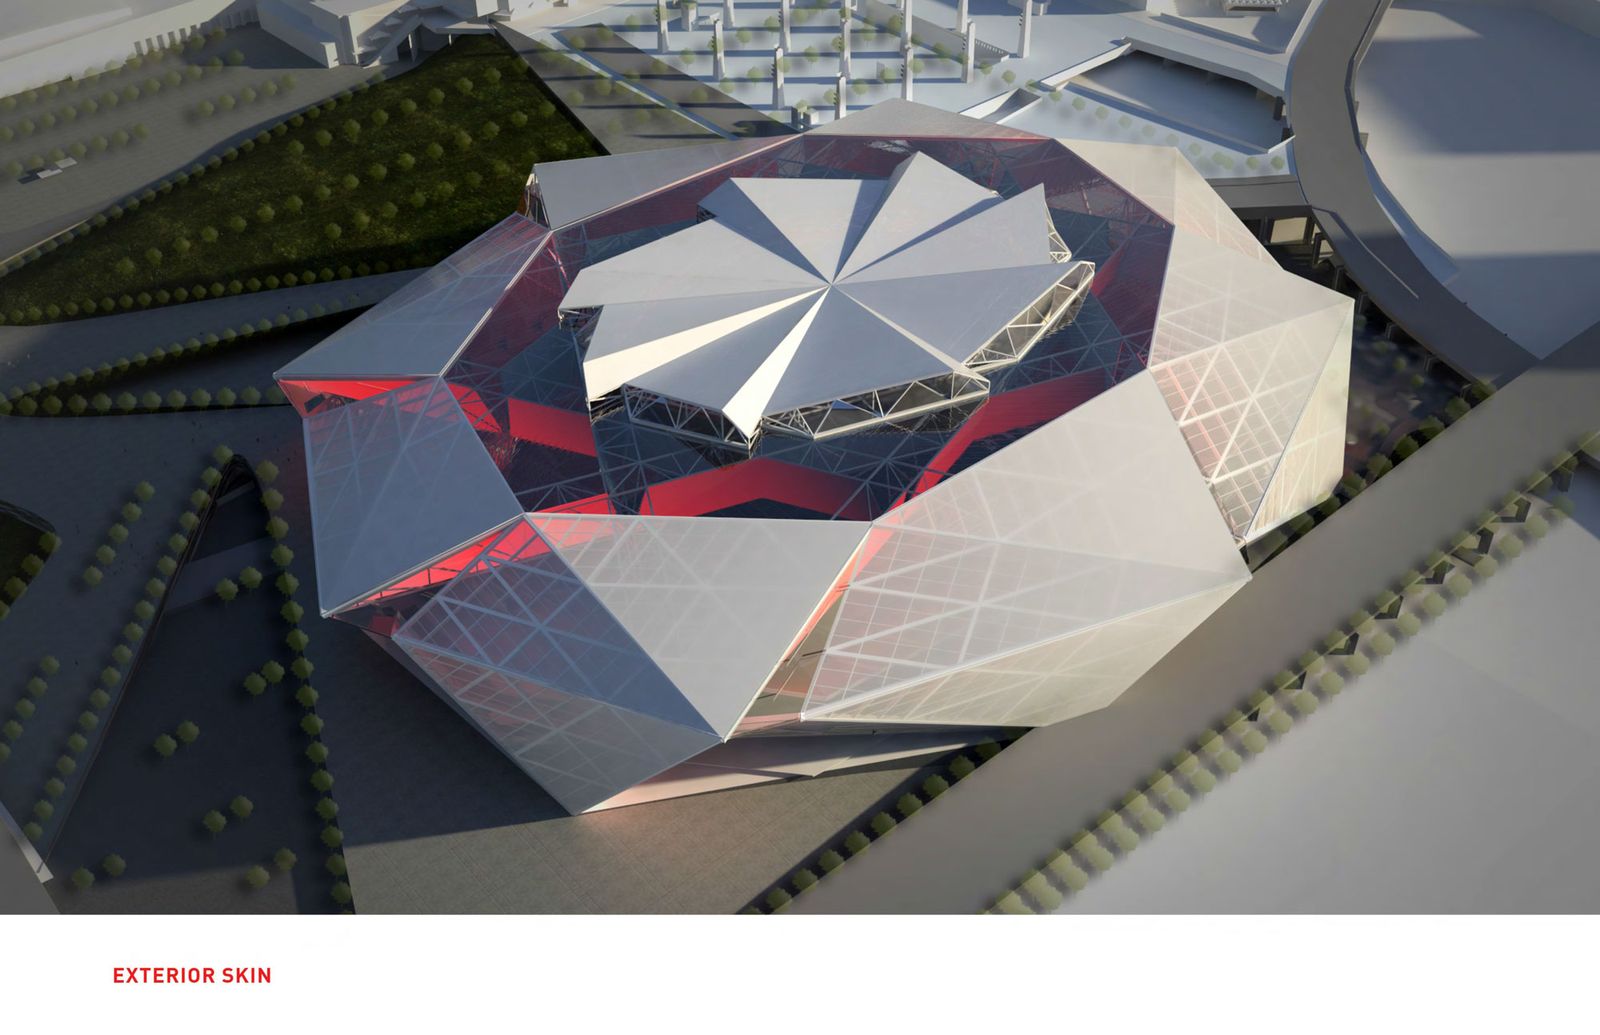 new falcons stadium retractable roof